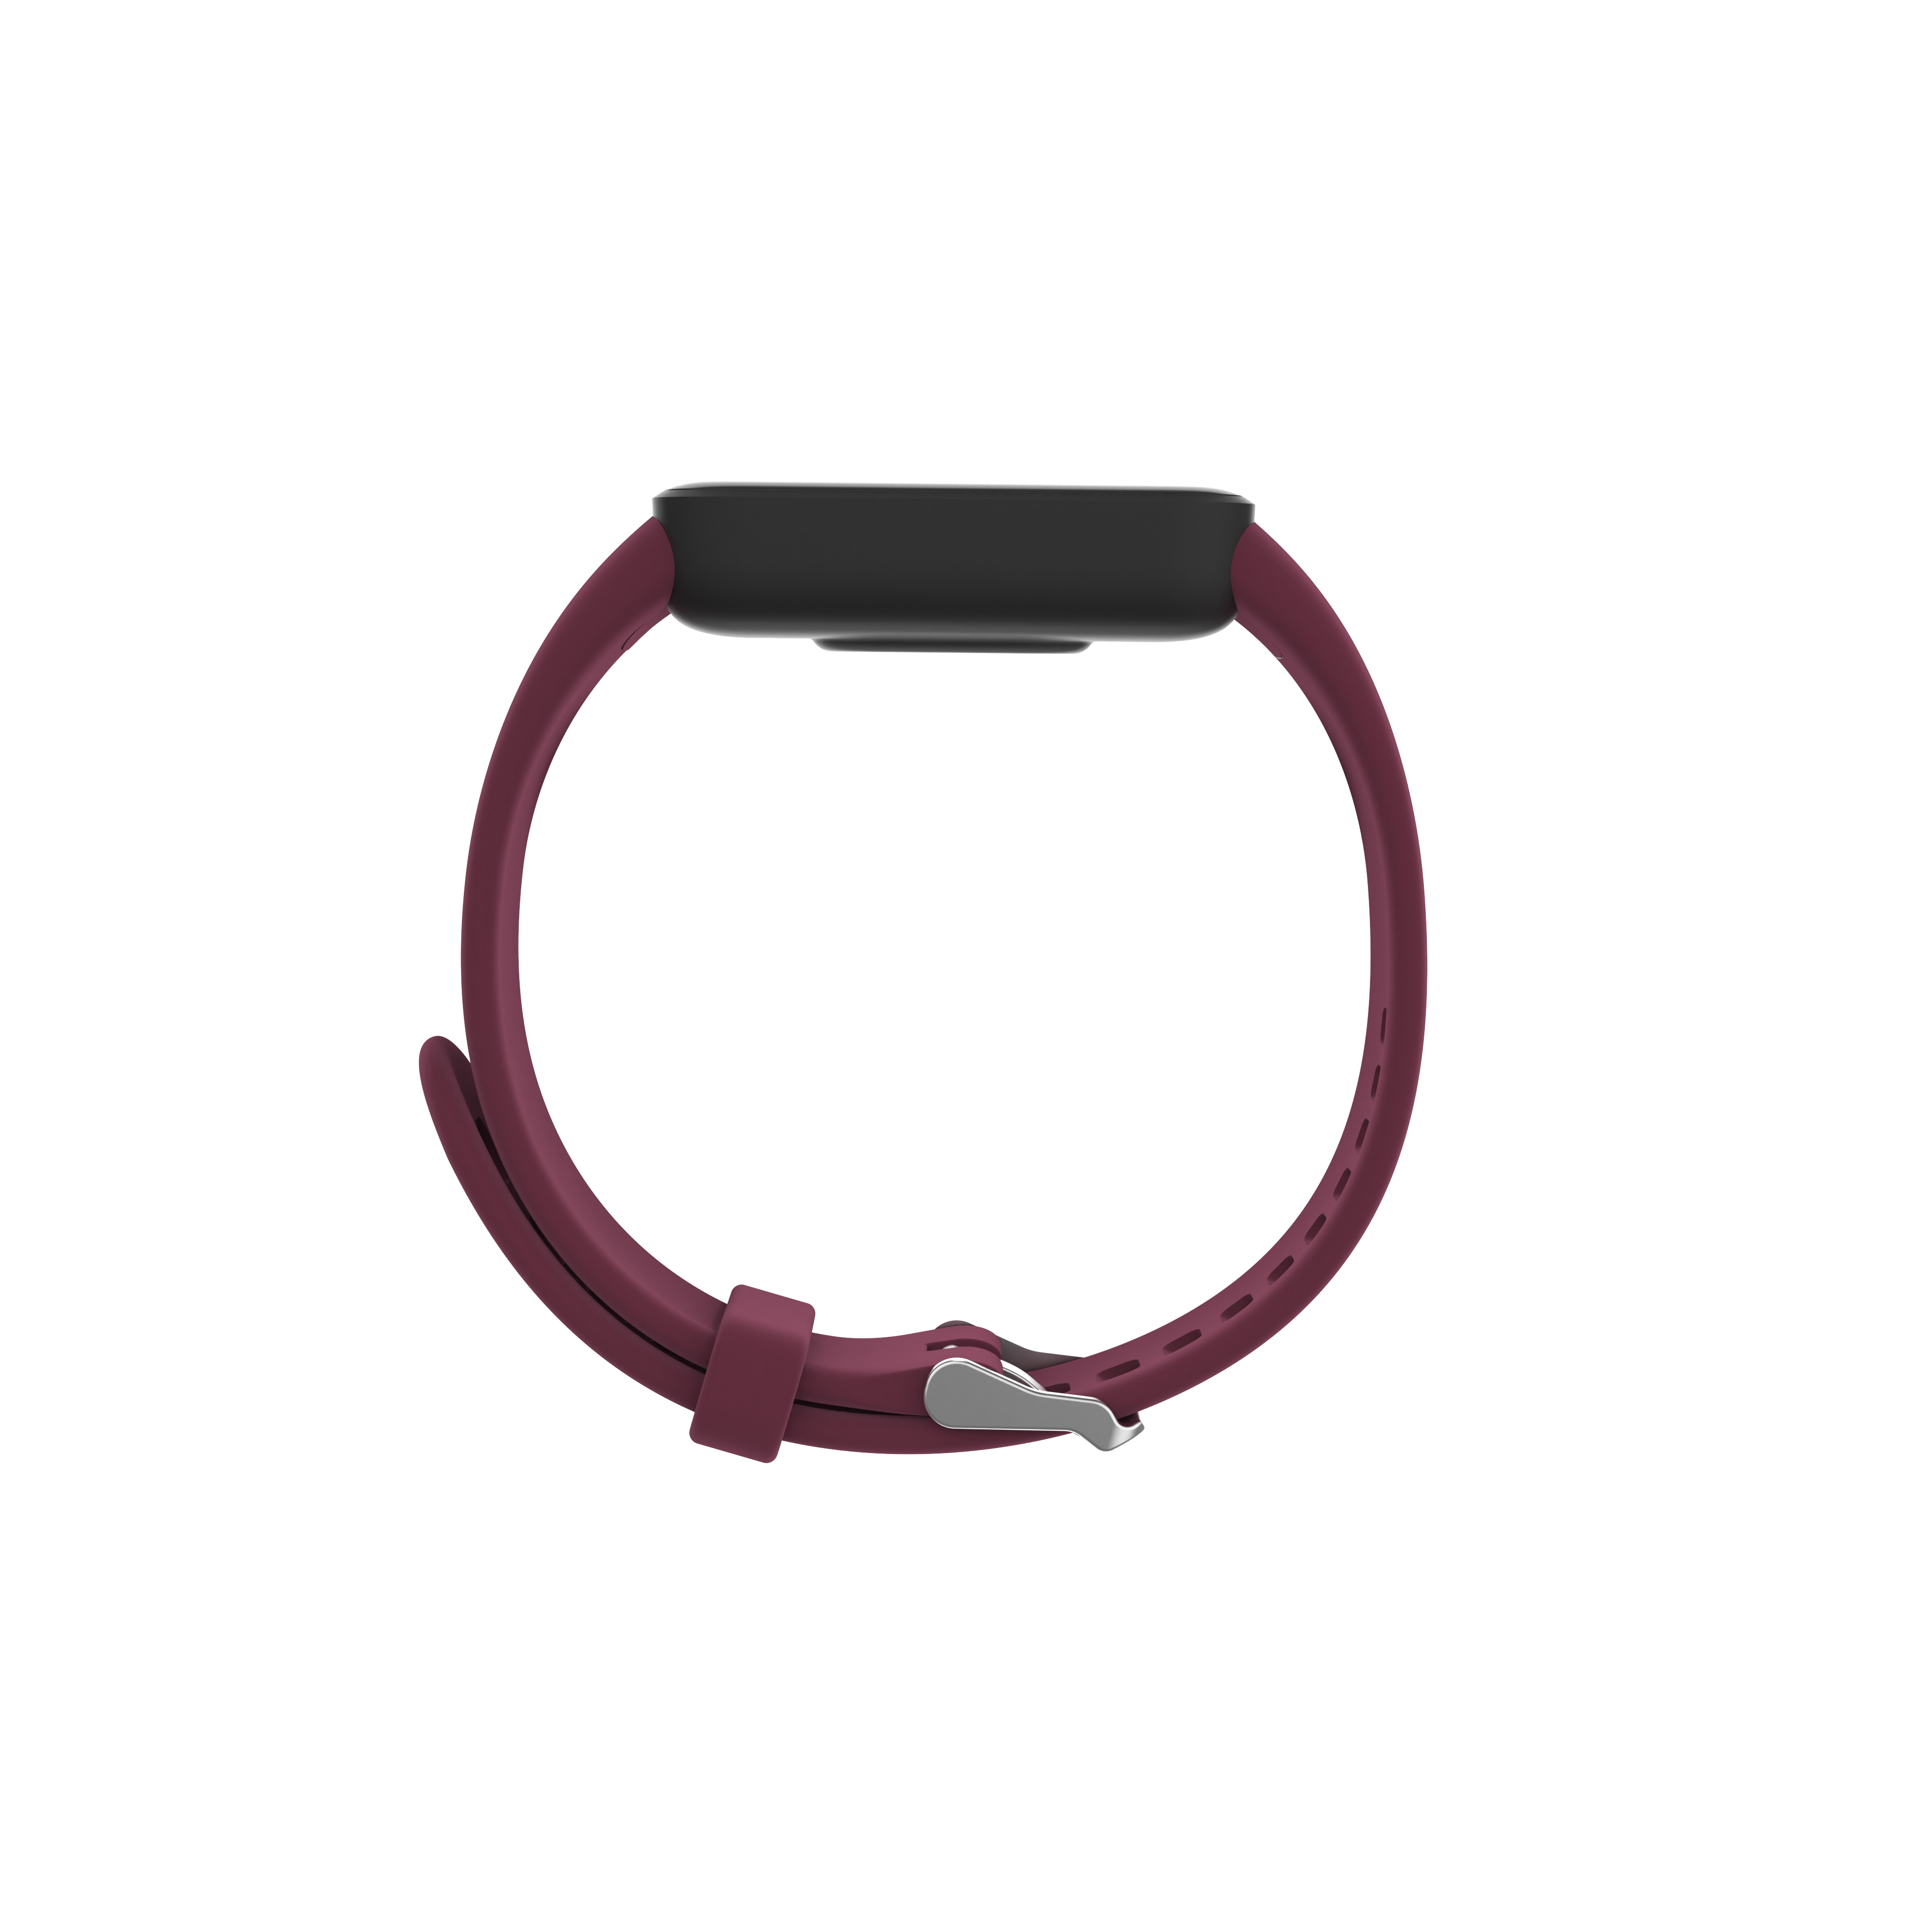 Hacking a cheap fitness tracker bracelet | rbaron.net